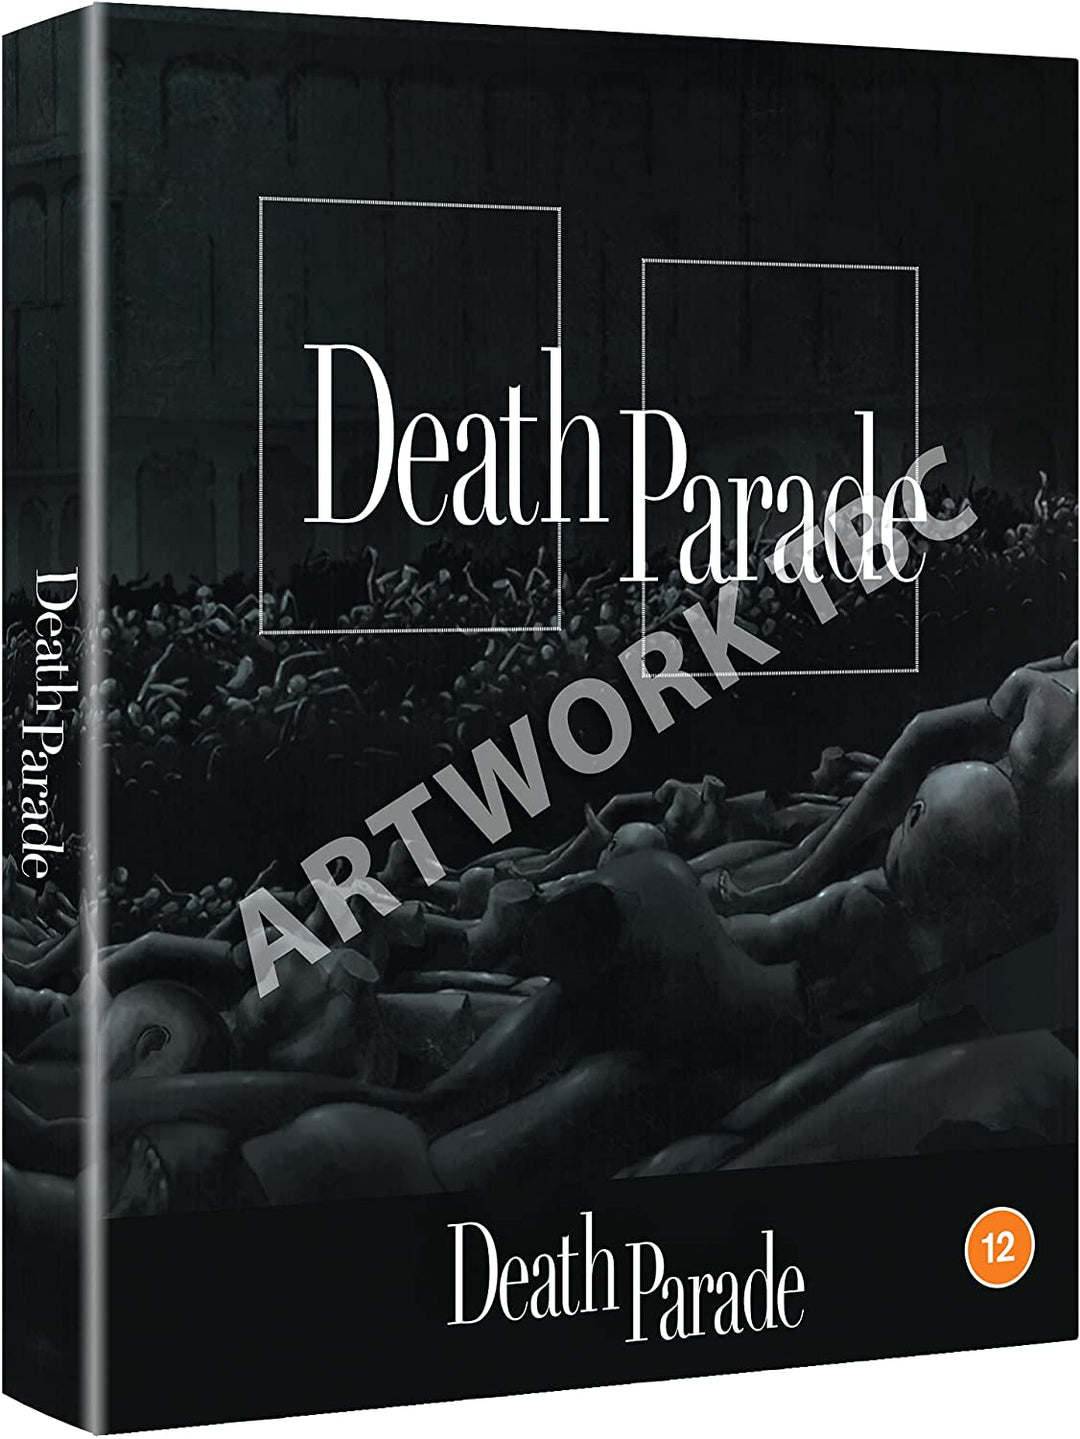 Death Parade – Die komplette Serie – Limited Edition + Digital Copy – Thriller [Blu-ray]